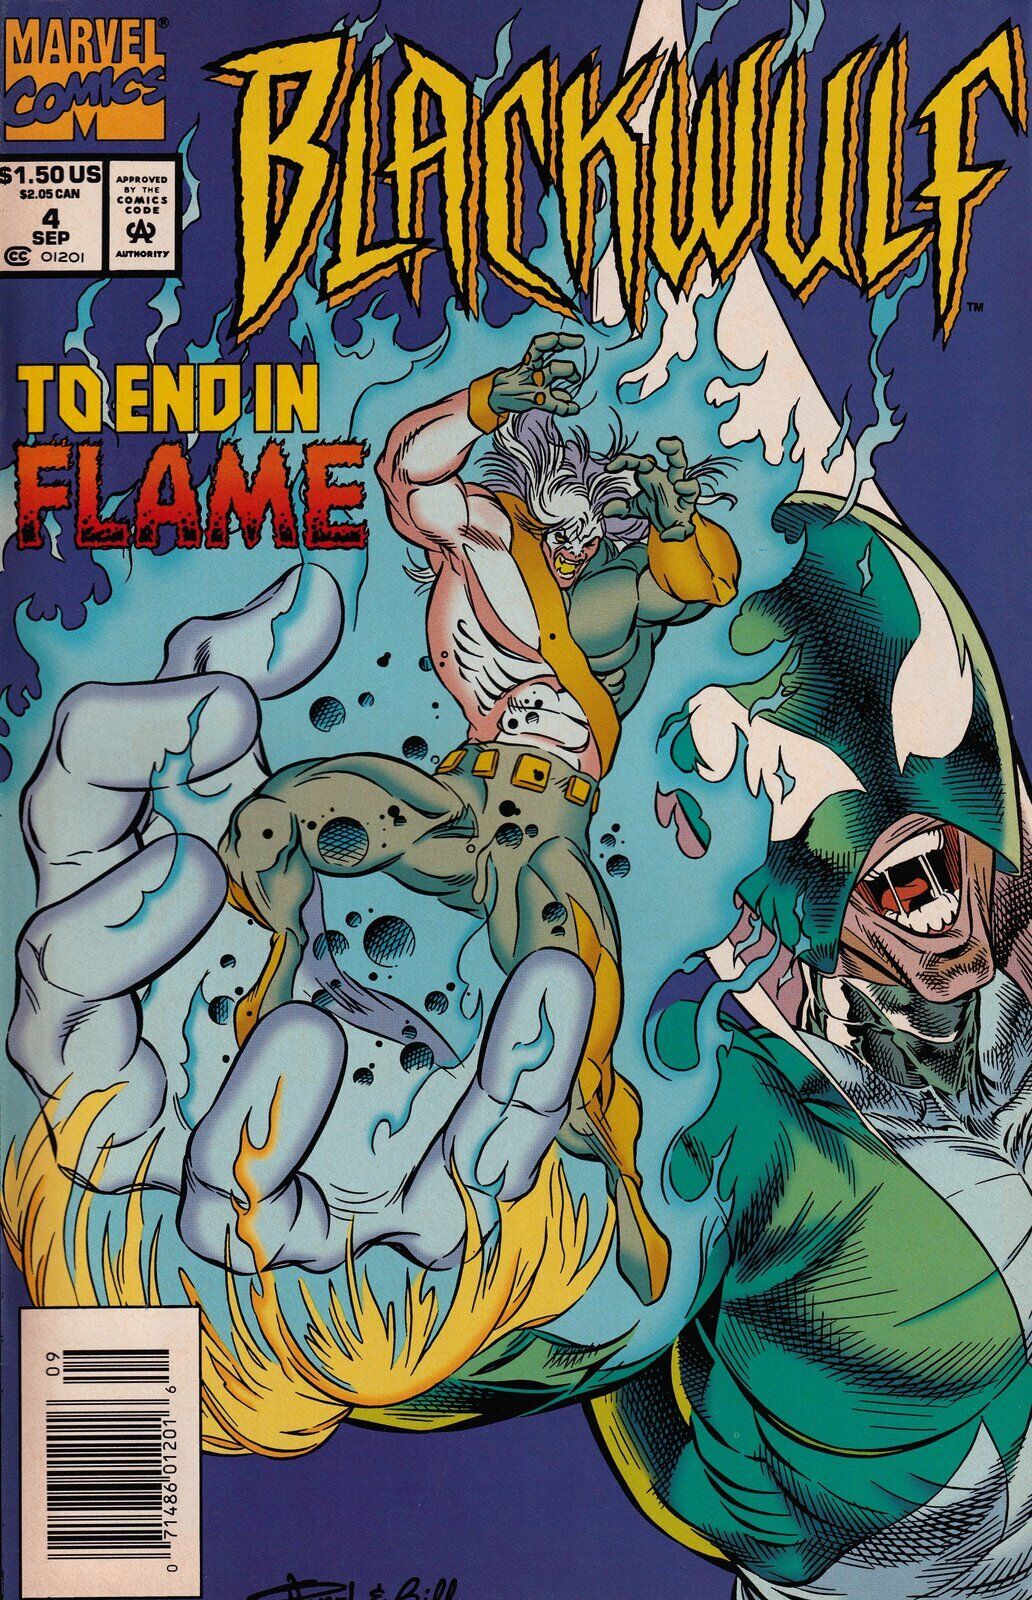 Blackwulf #4 Newsstand Cover (1994-1995) Marvel